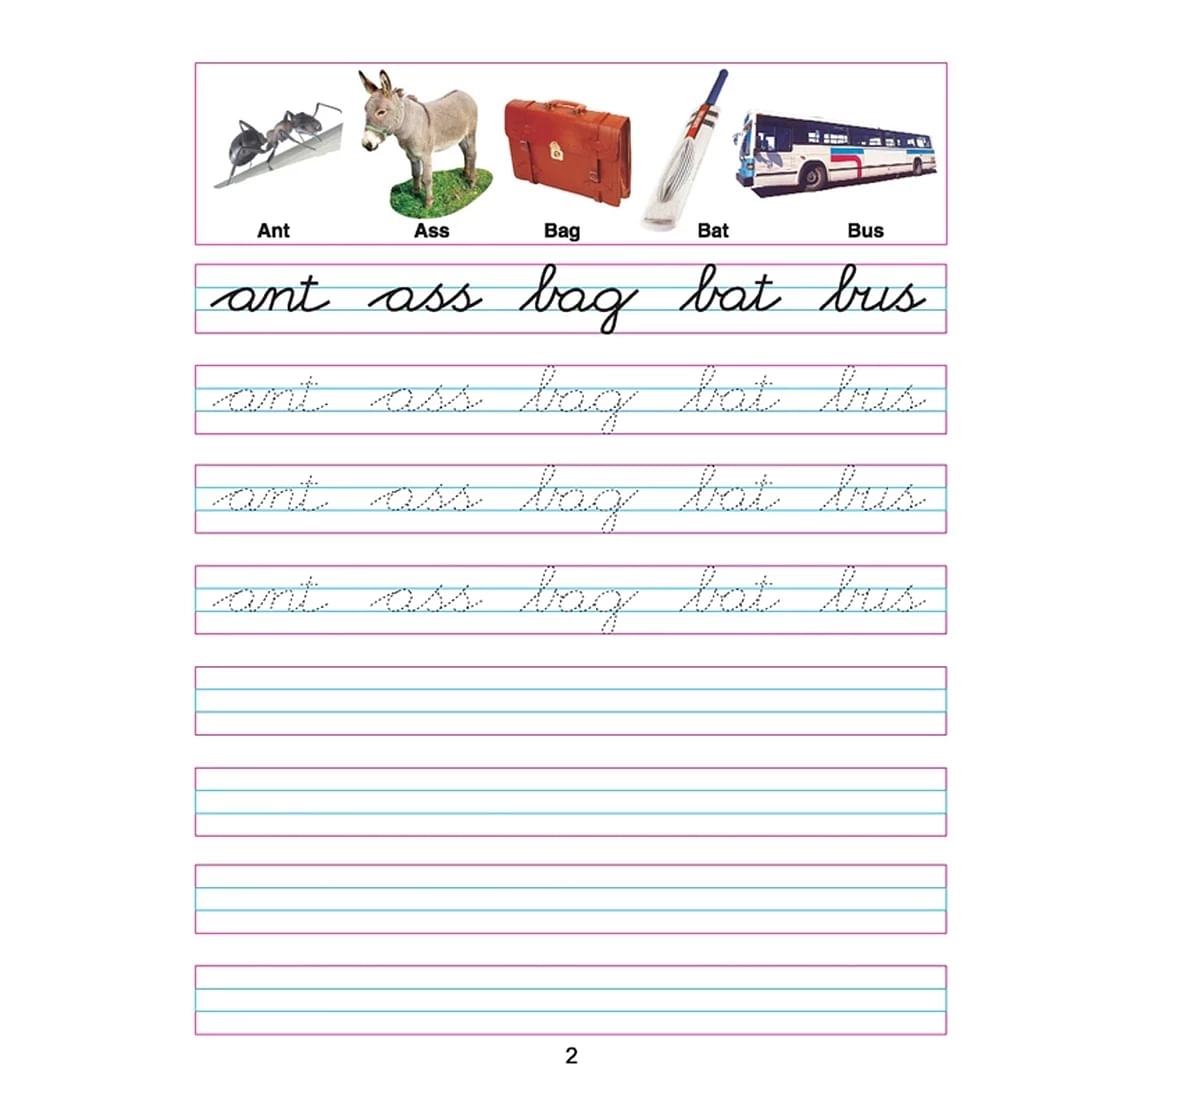 Dreamland Paper Back Cursive Writing Words Part 2 Book for kids 3Y+, Multicolour